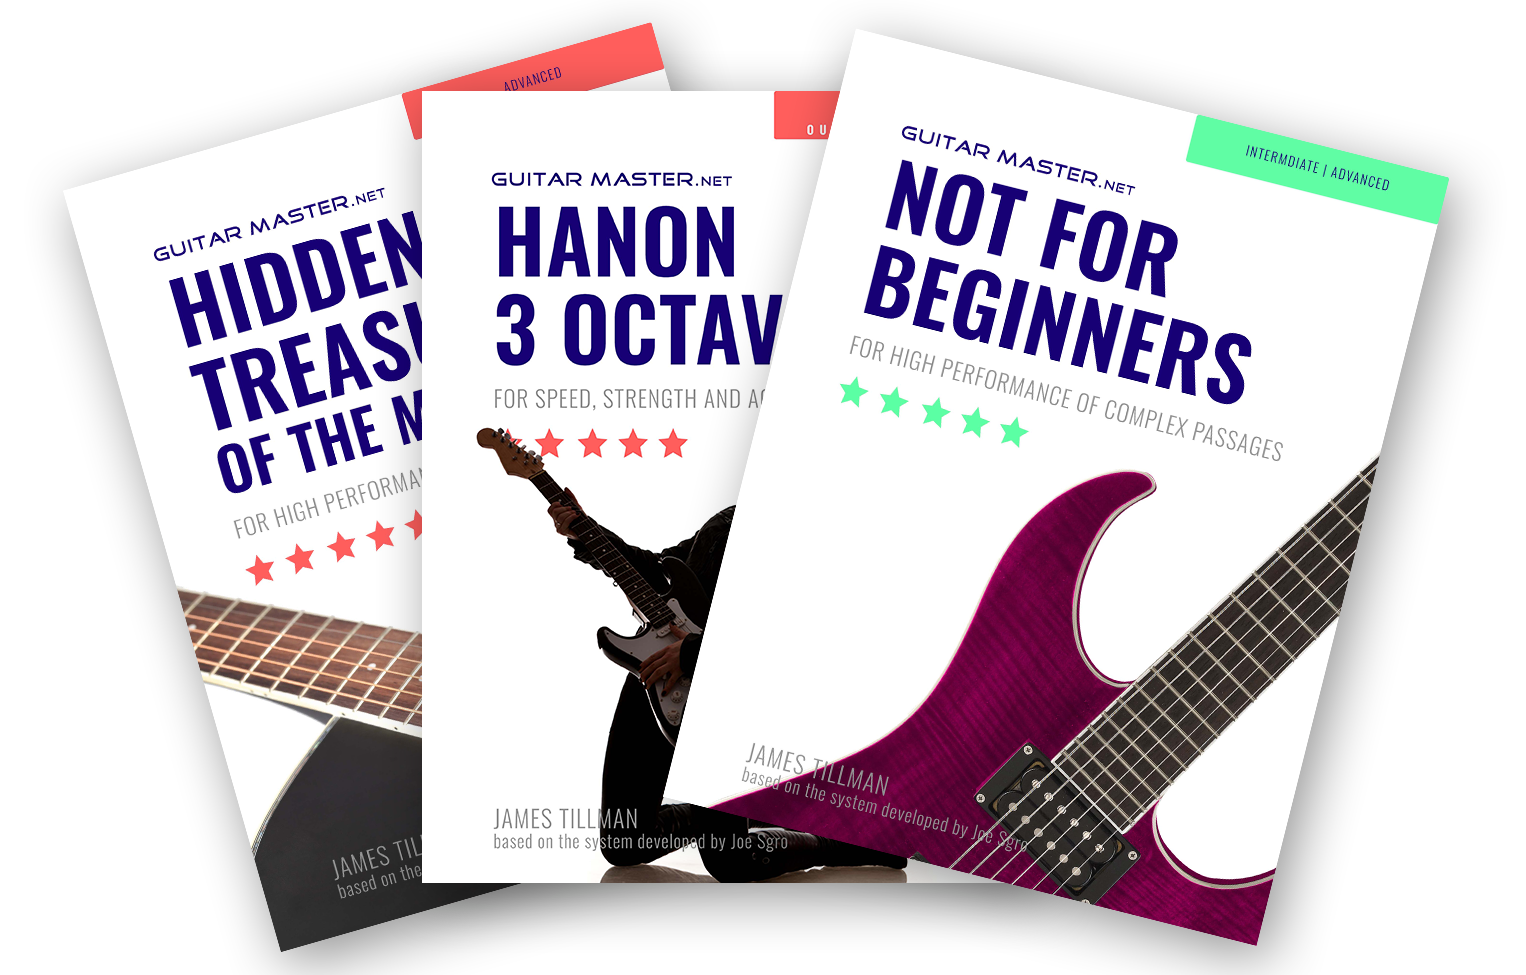 Guitar master book covers